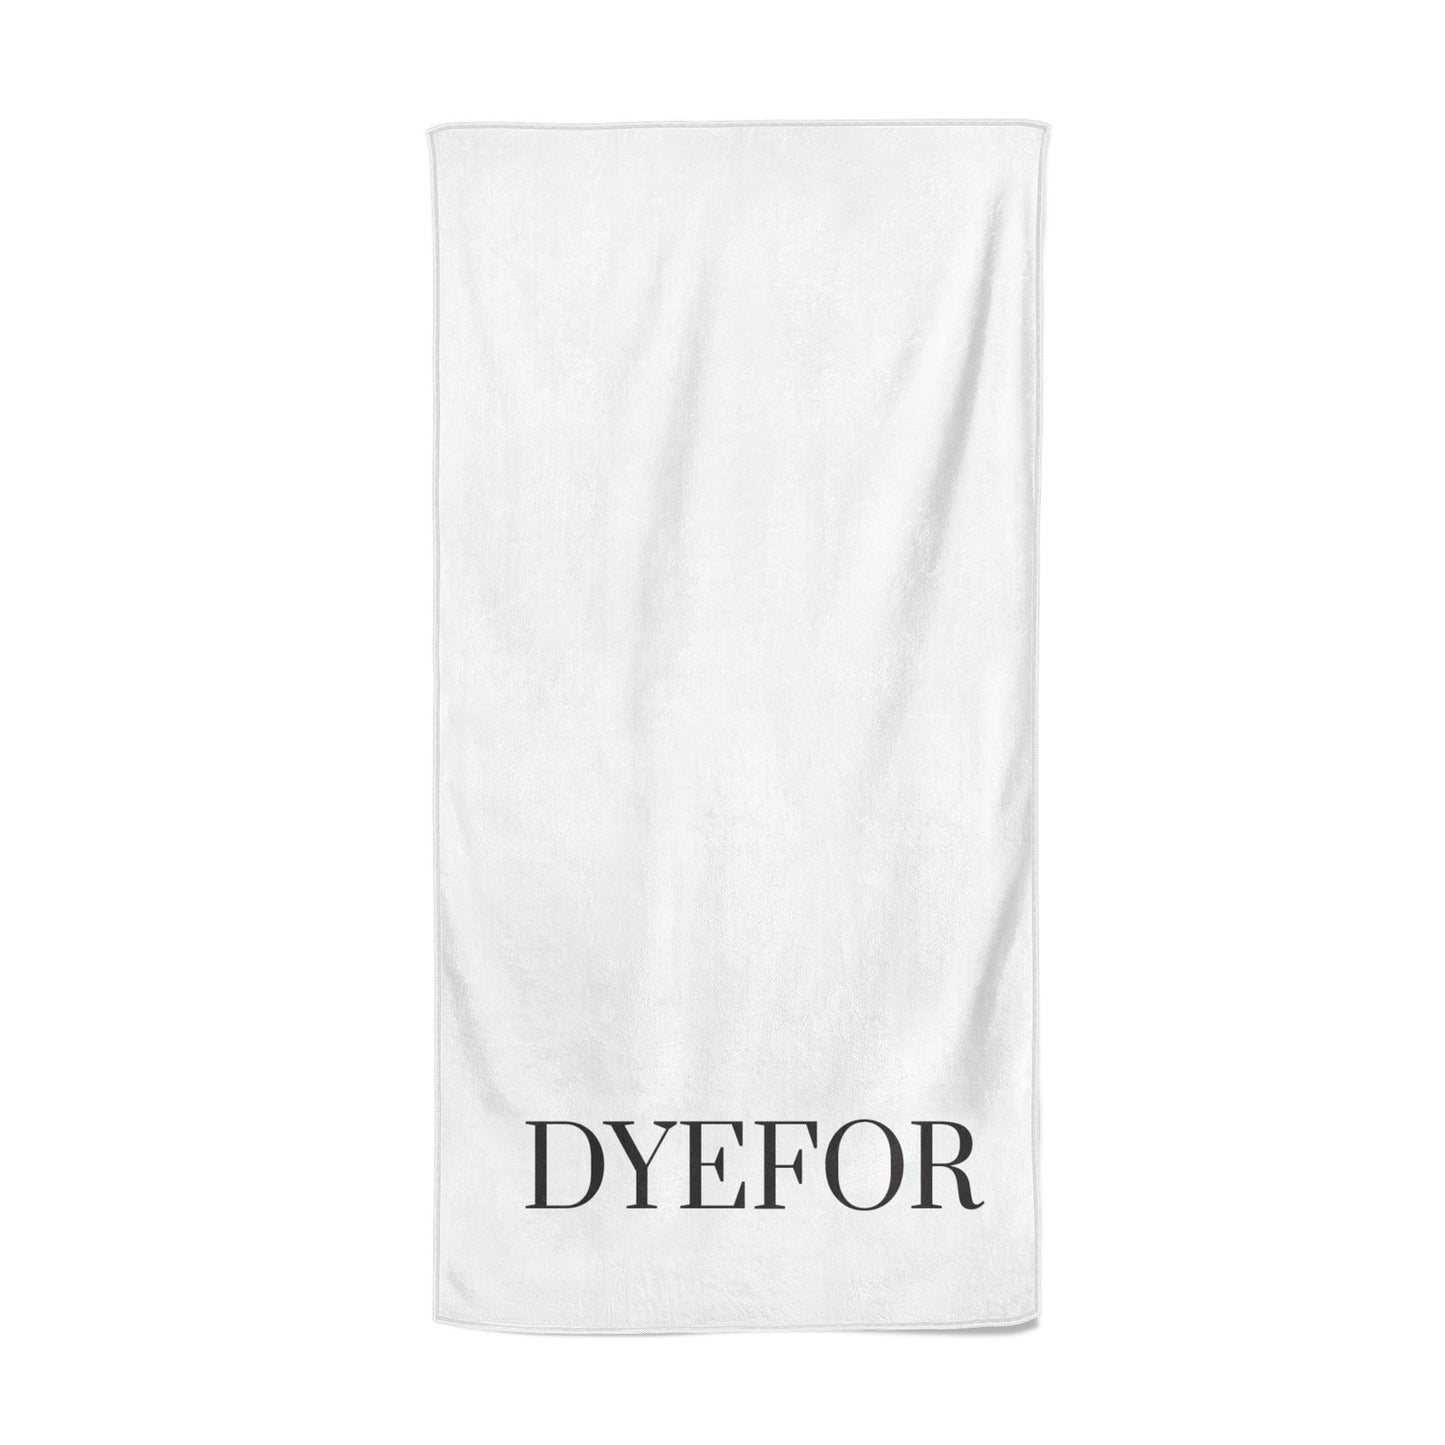 Name Personalised White Beach Towel